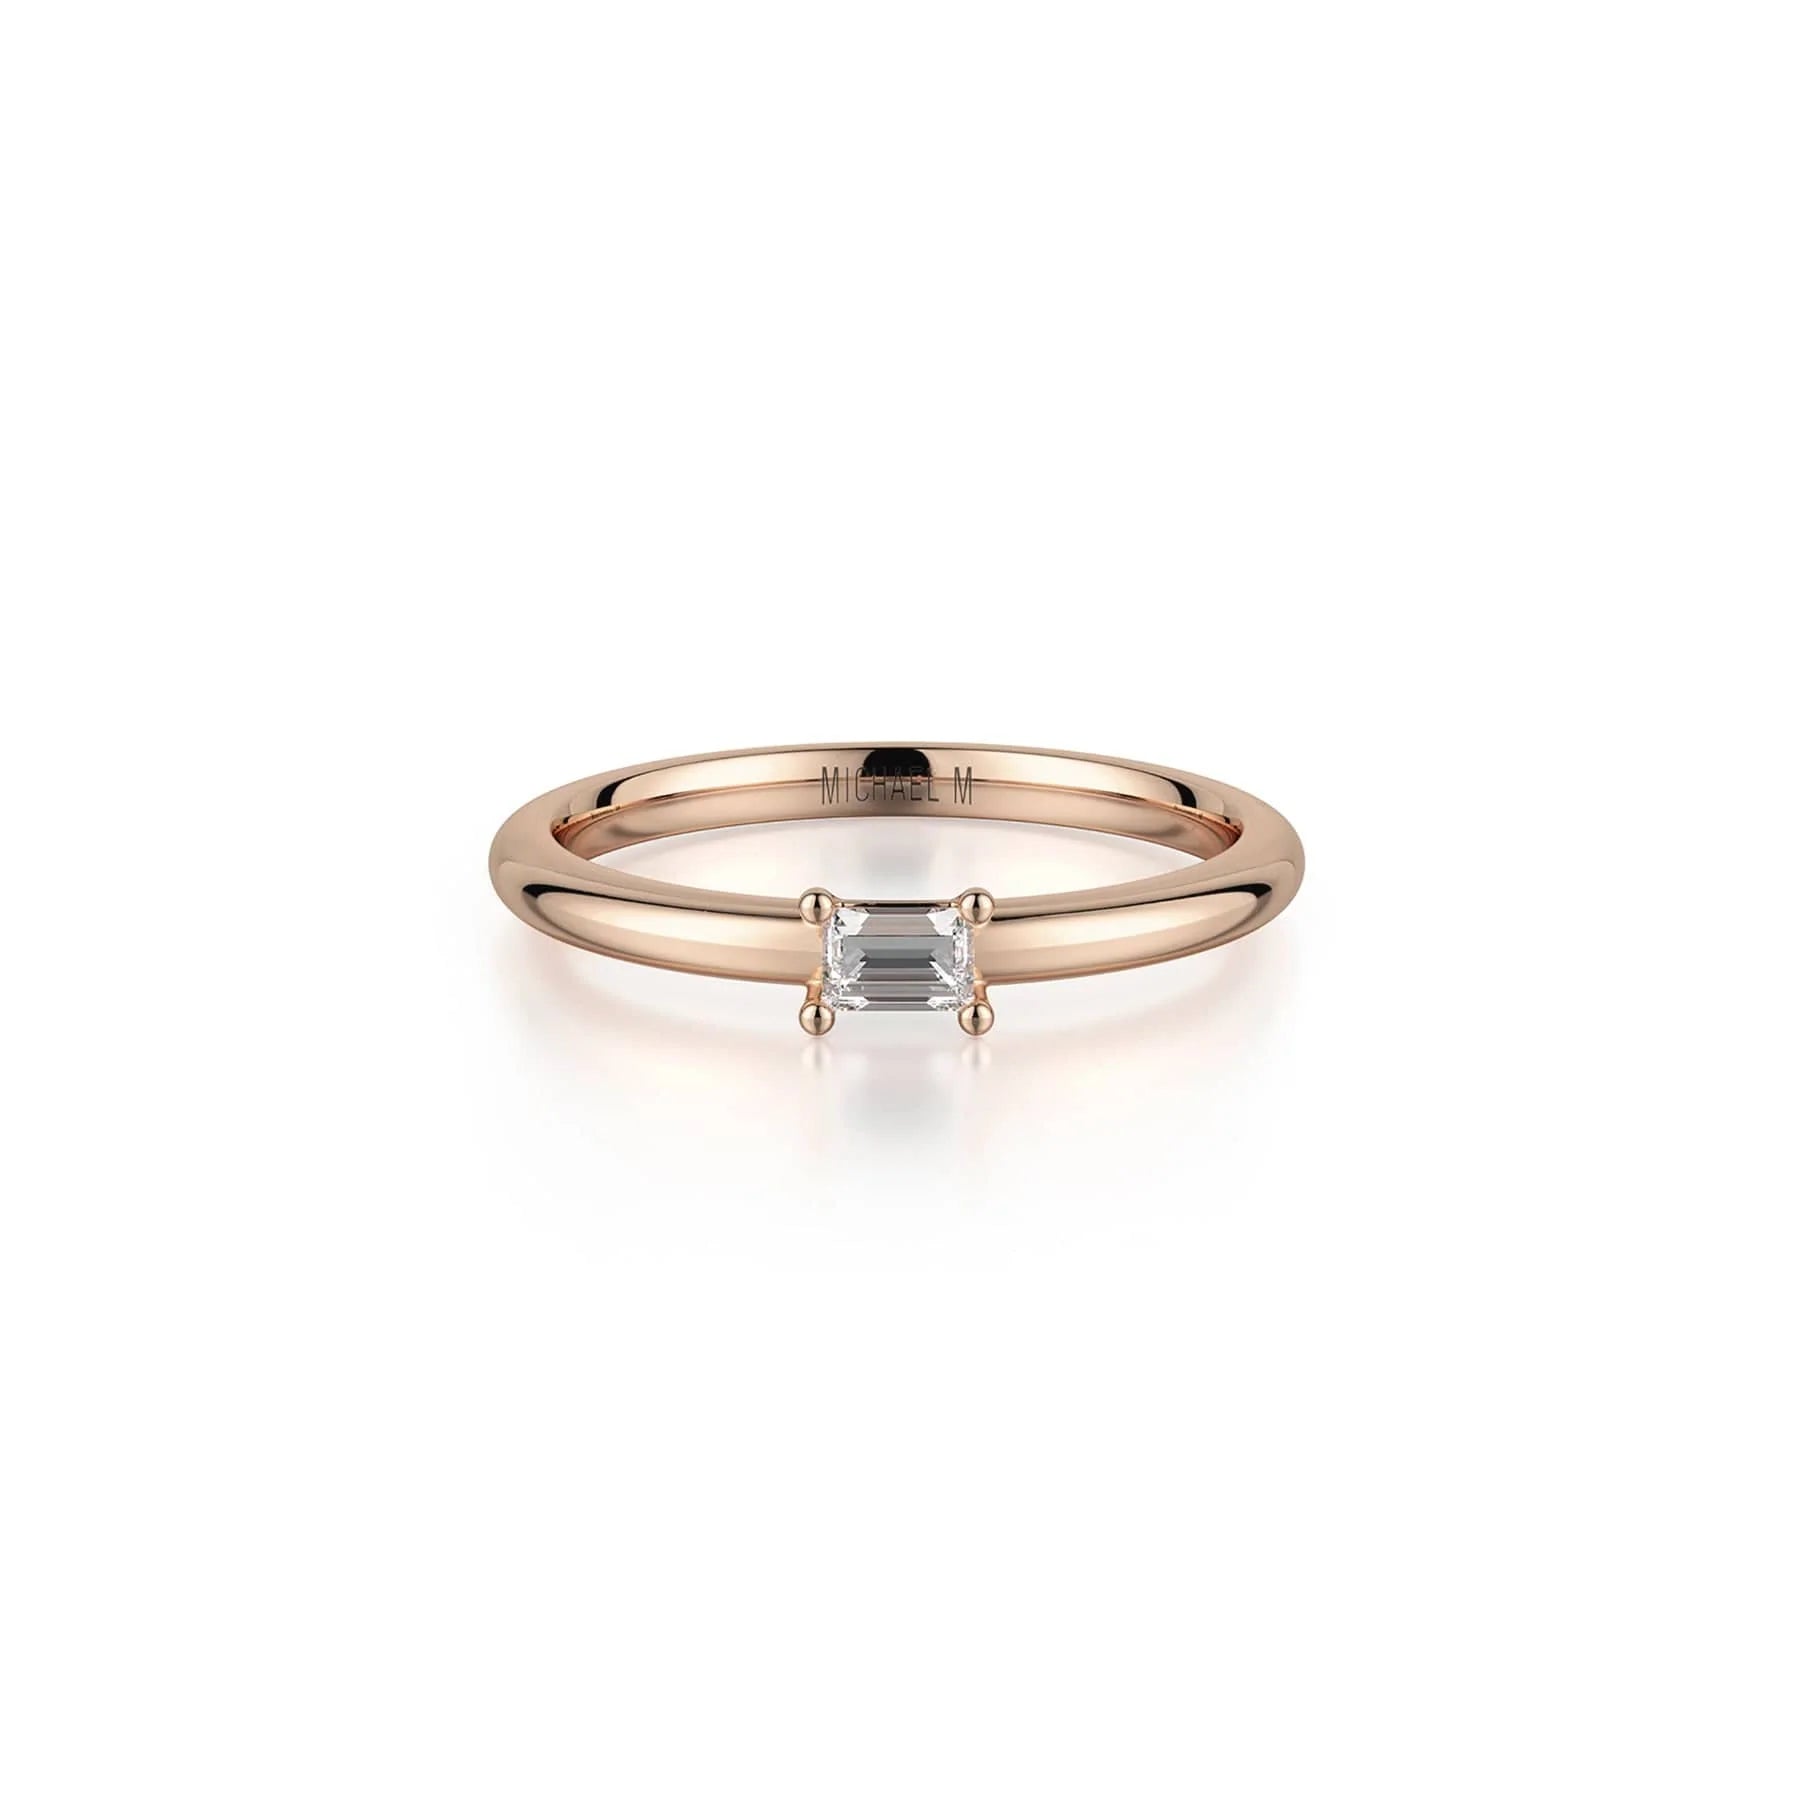 MICHAEL M Fashion Rings 14K Rose Gold / 4 Petite Solitaire Diamond Ring B324-RG4